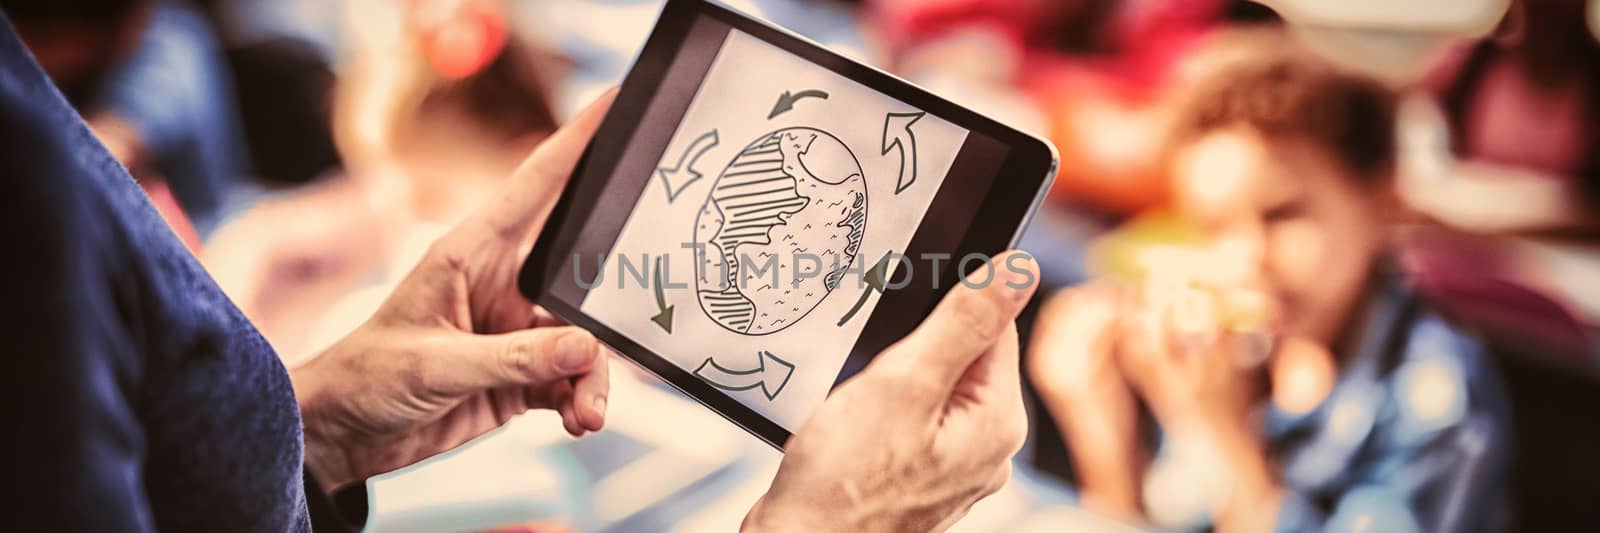 Teacher using digital tablet while teaching in classroom by Wavebreakmedia